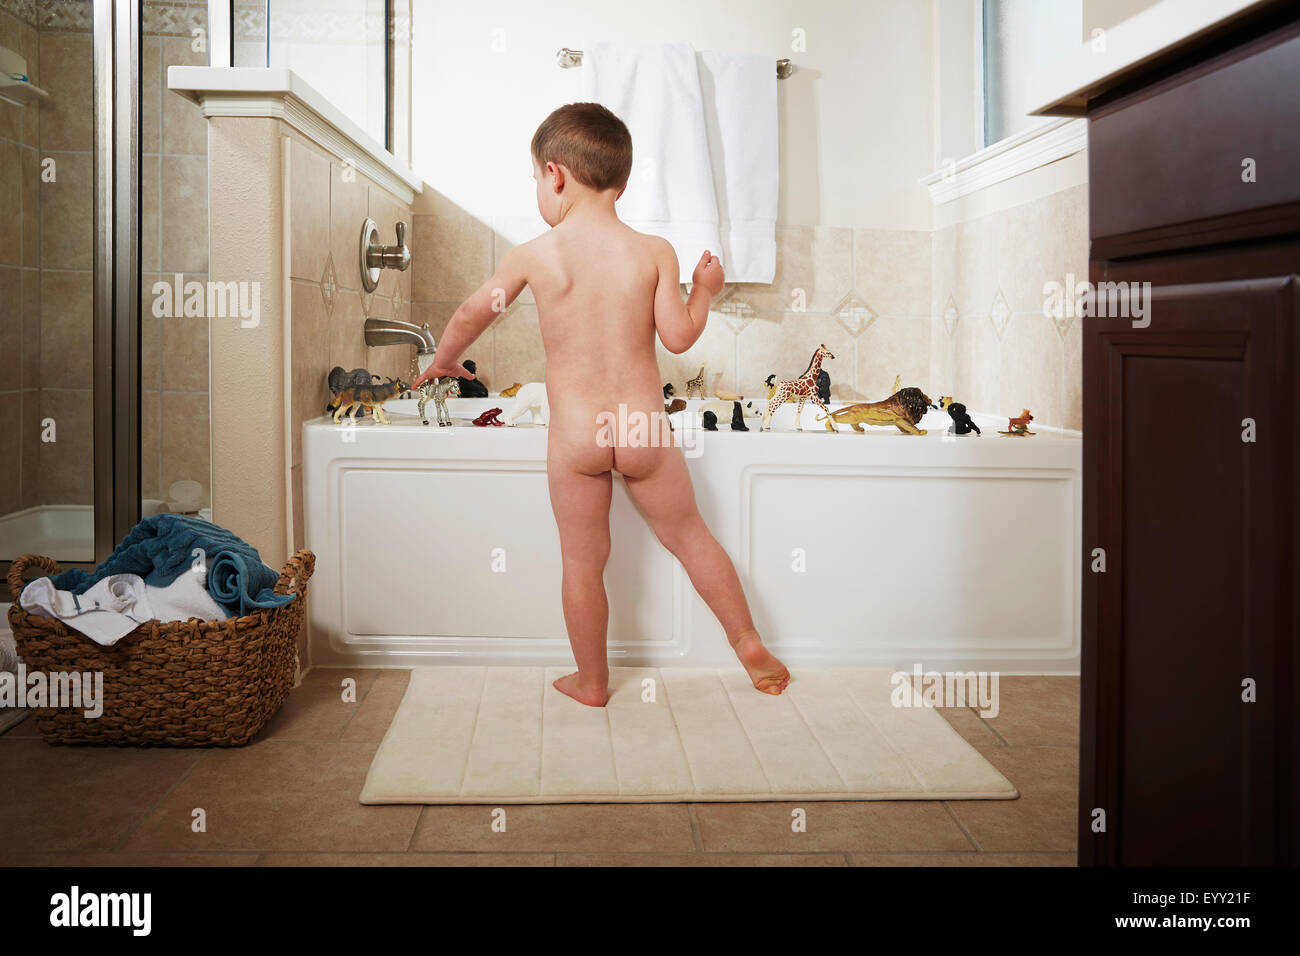 Nude Caucasian boy playing in bathtub Stock Photo